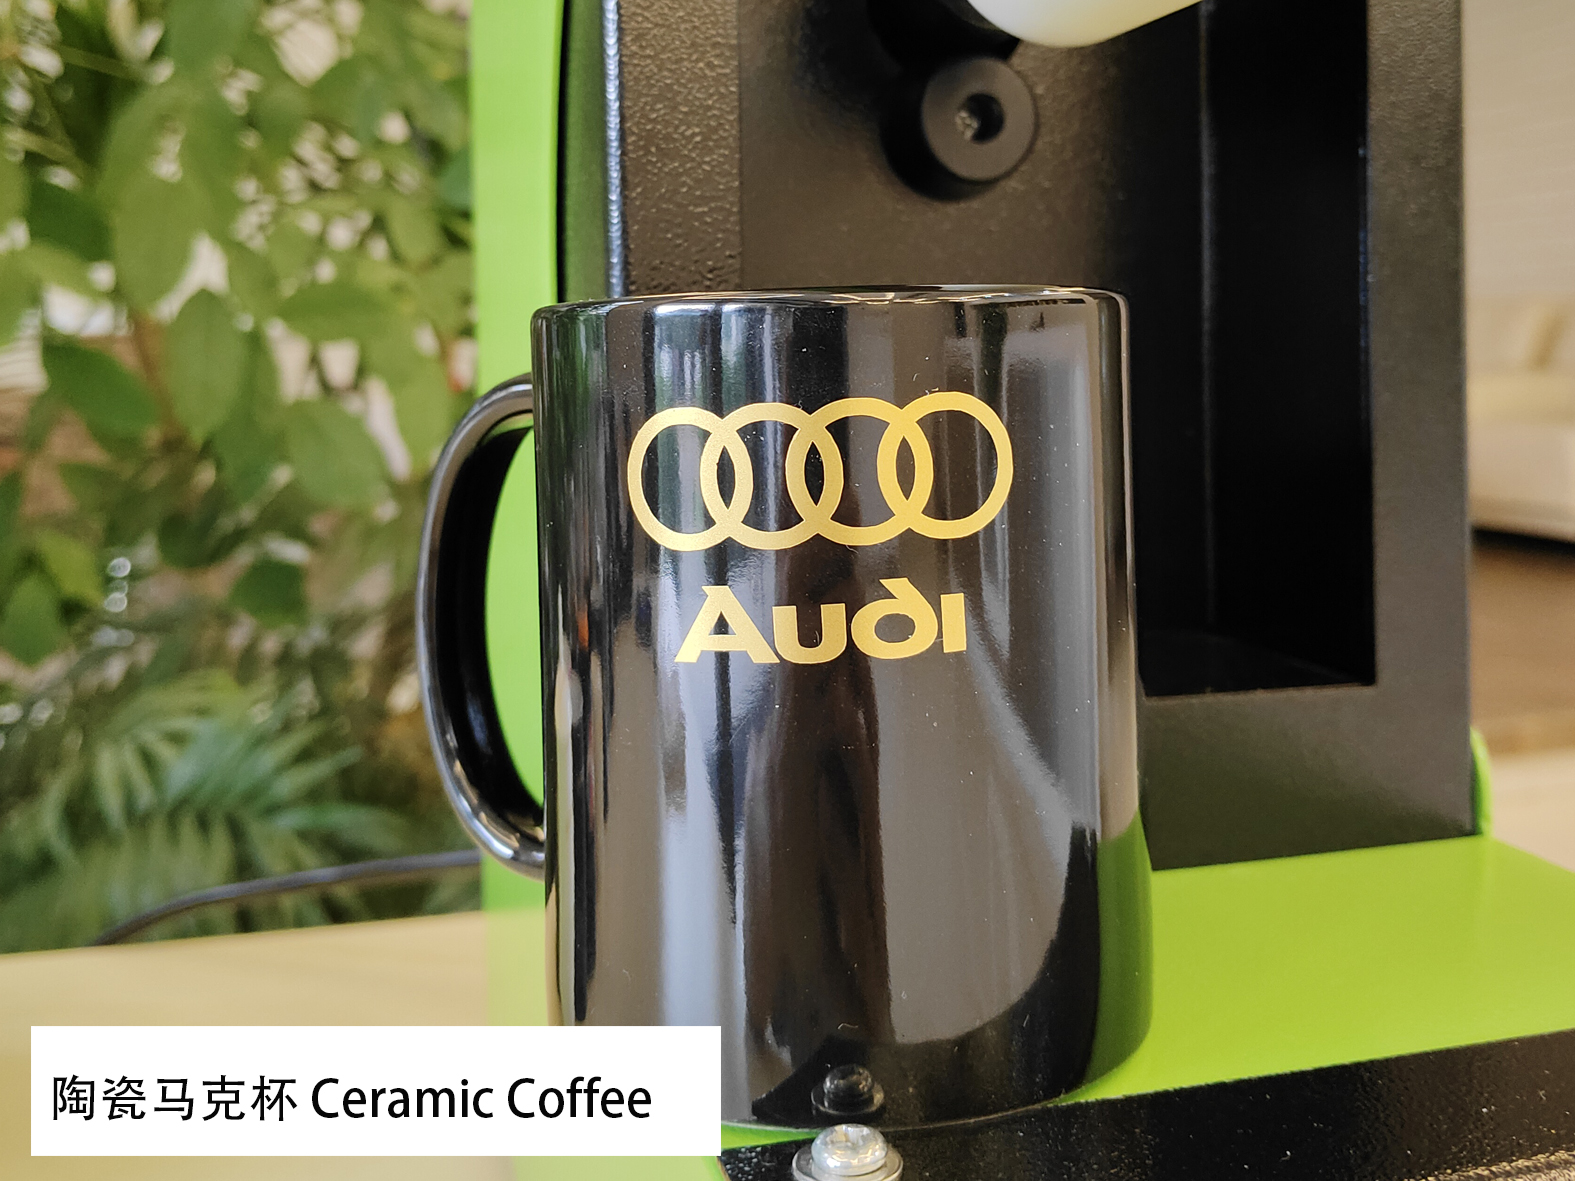 Lámina dorada brillante de calcomanías de transferencia de calor (HSF-GD811) para café de cerámica con el logotipo de Audi